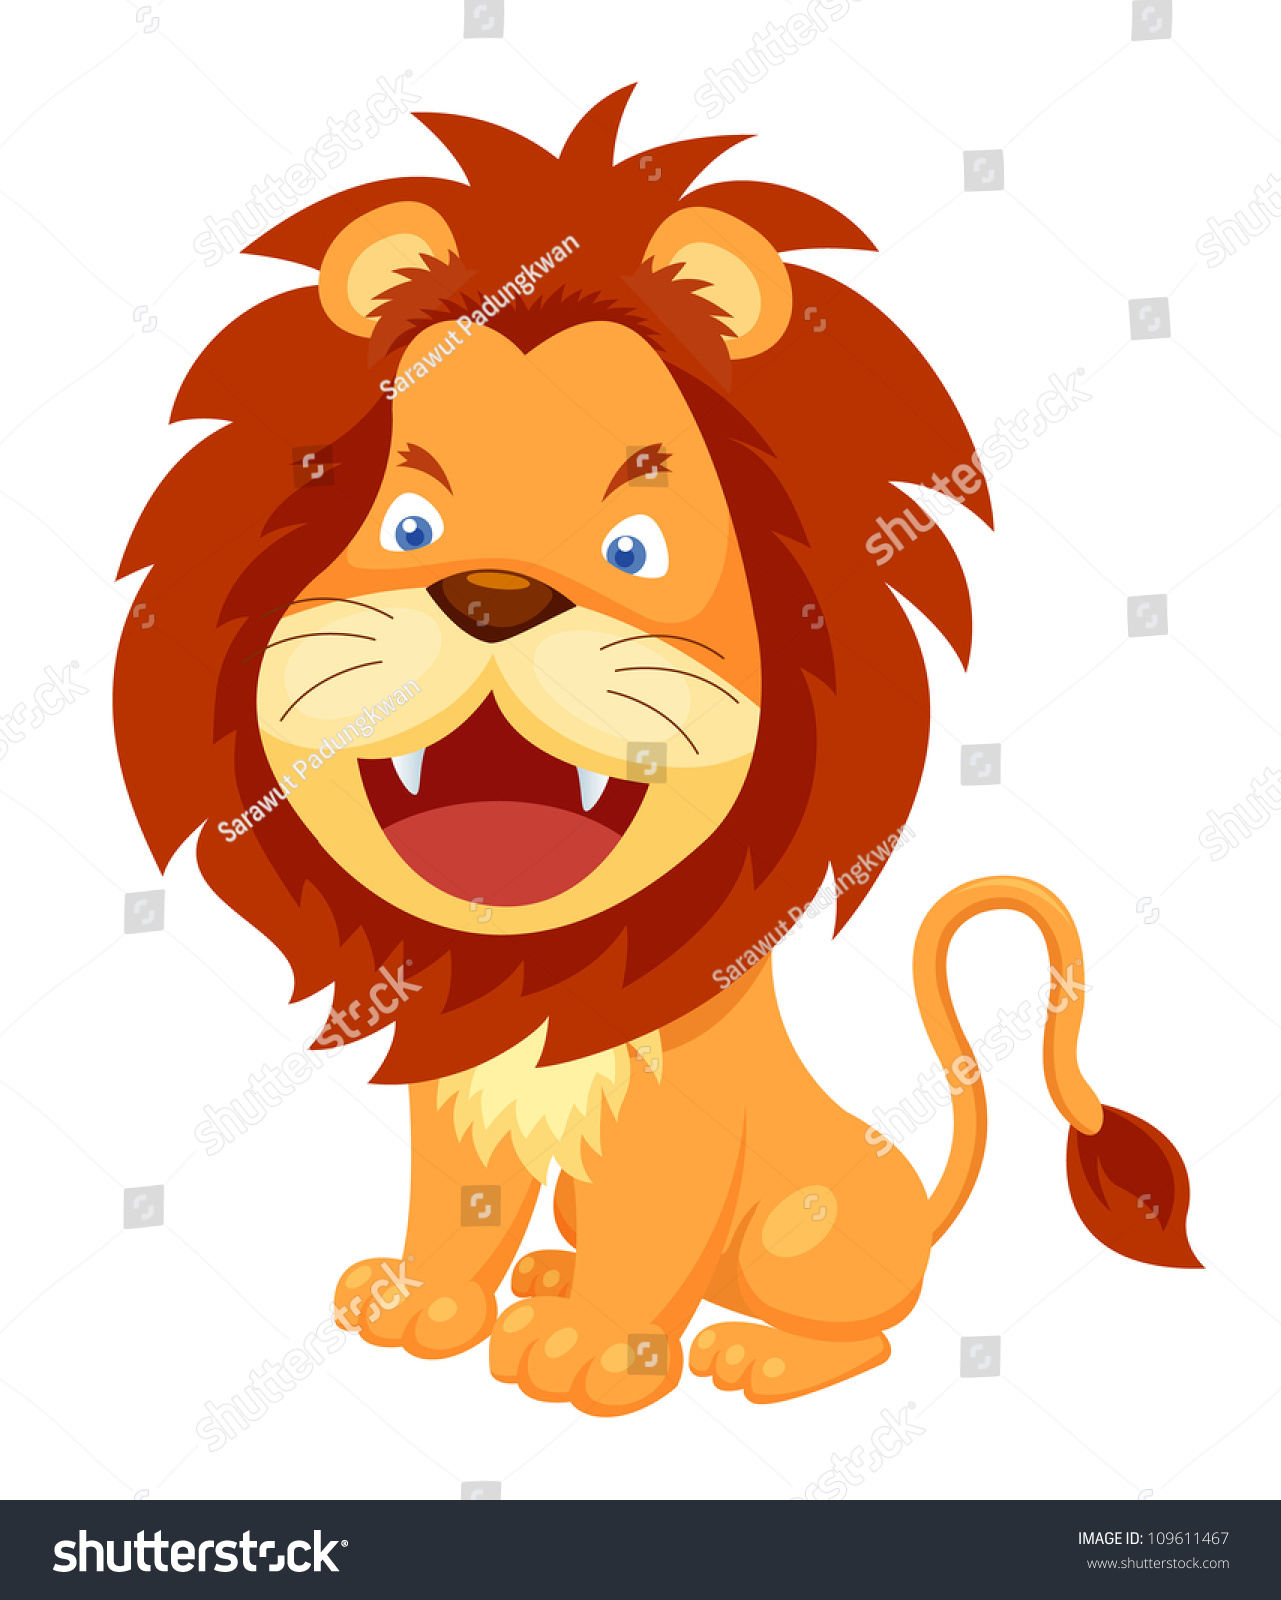 Lion Vector - 109611467 : Shutterstock